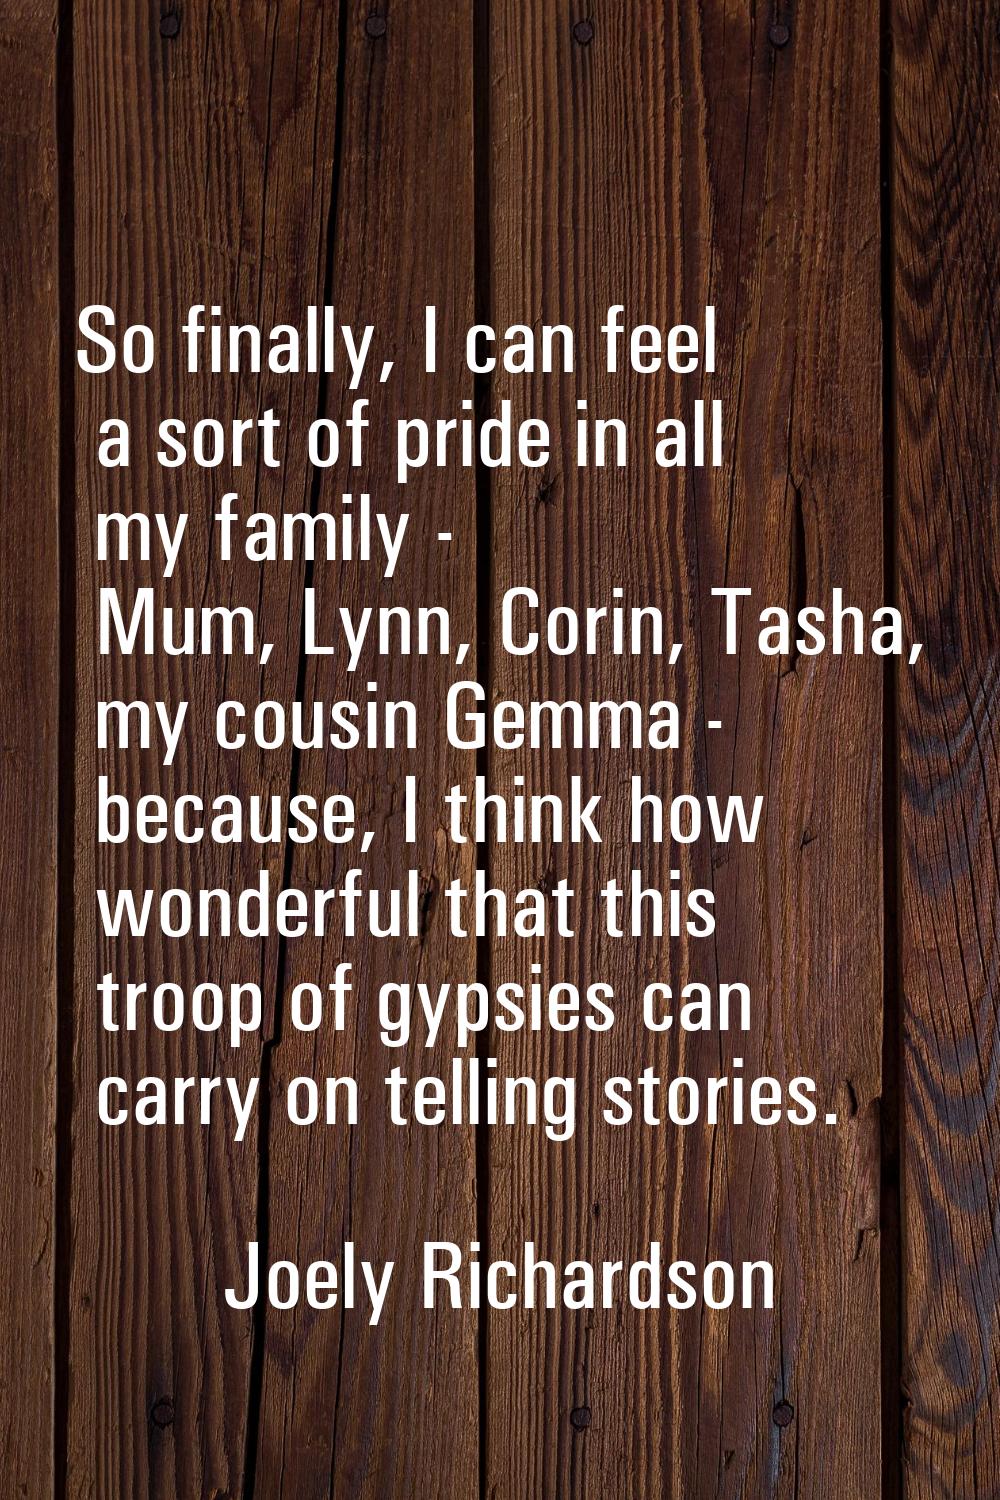 So finally, I can feel a sort of pride in all my family - Mum, Lynn, Corin, Tasha, my cousin Gemma 